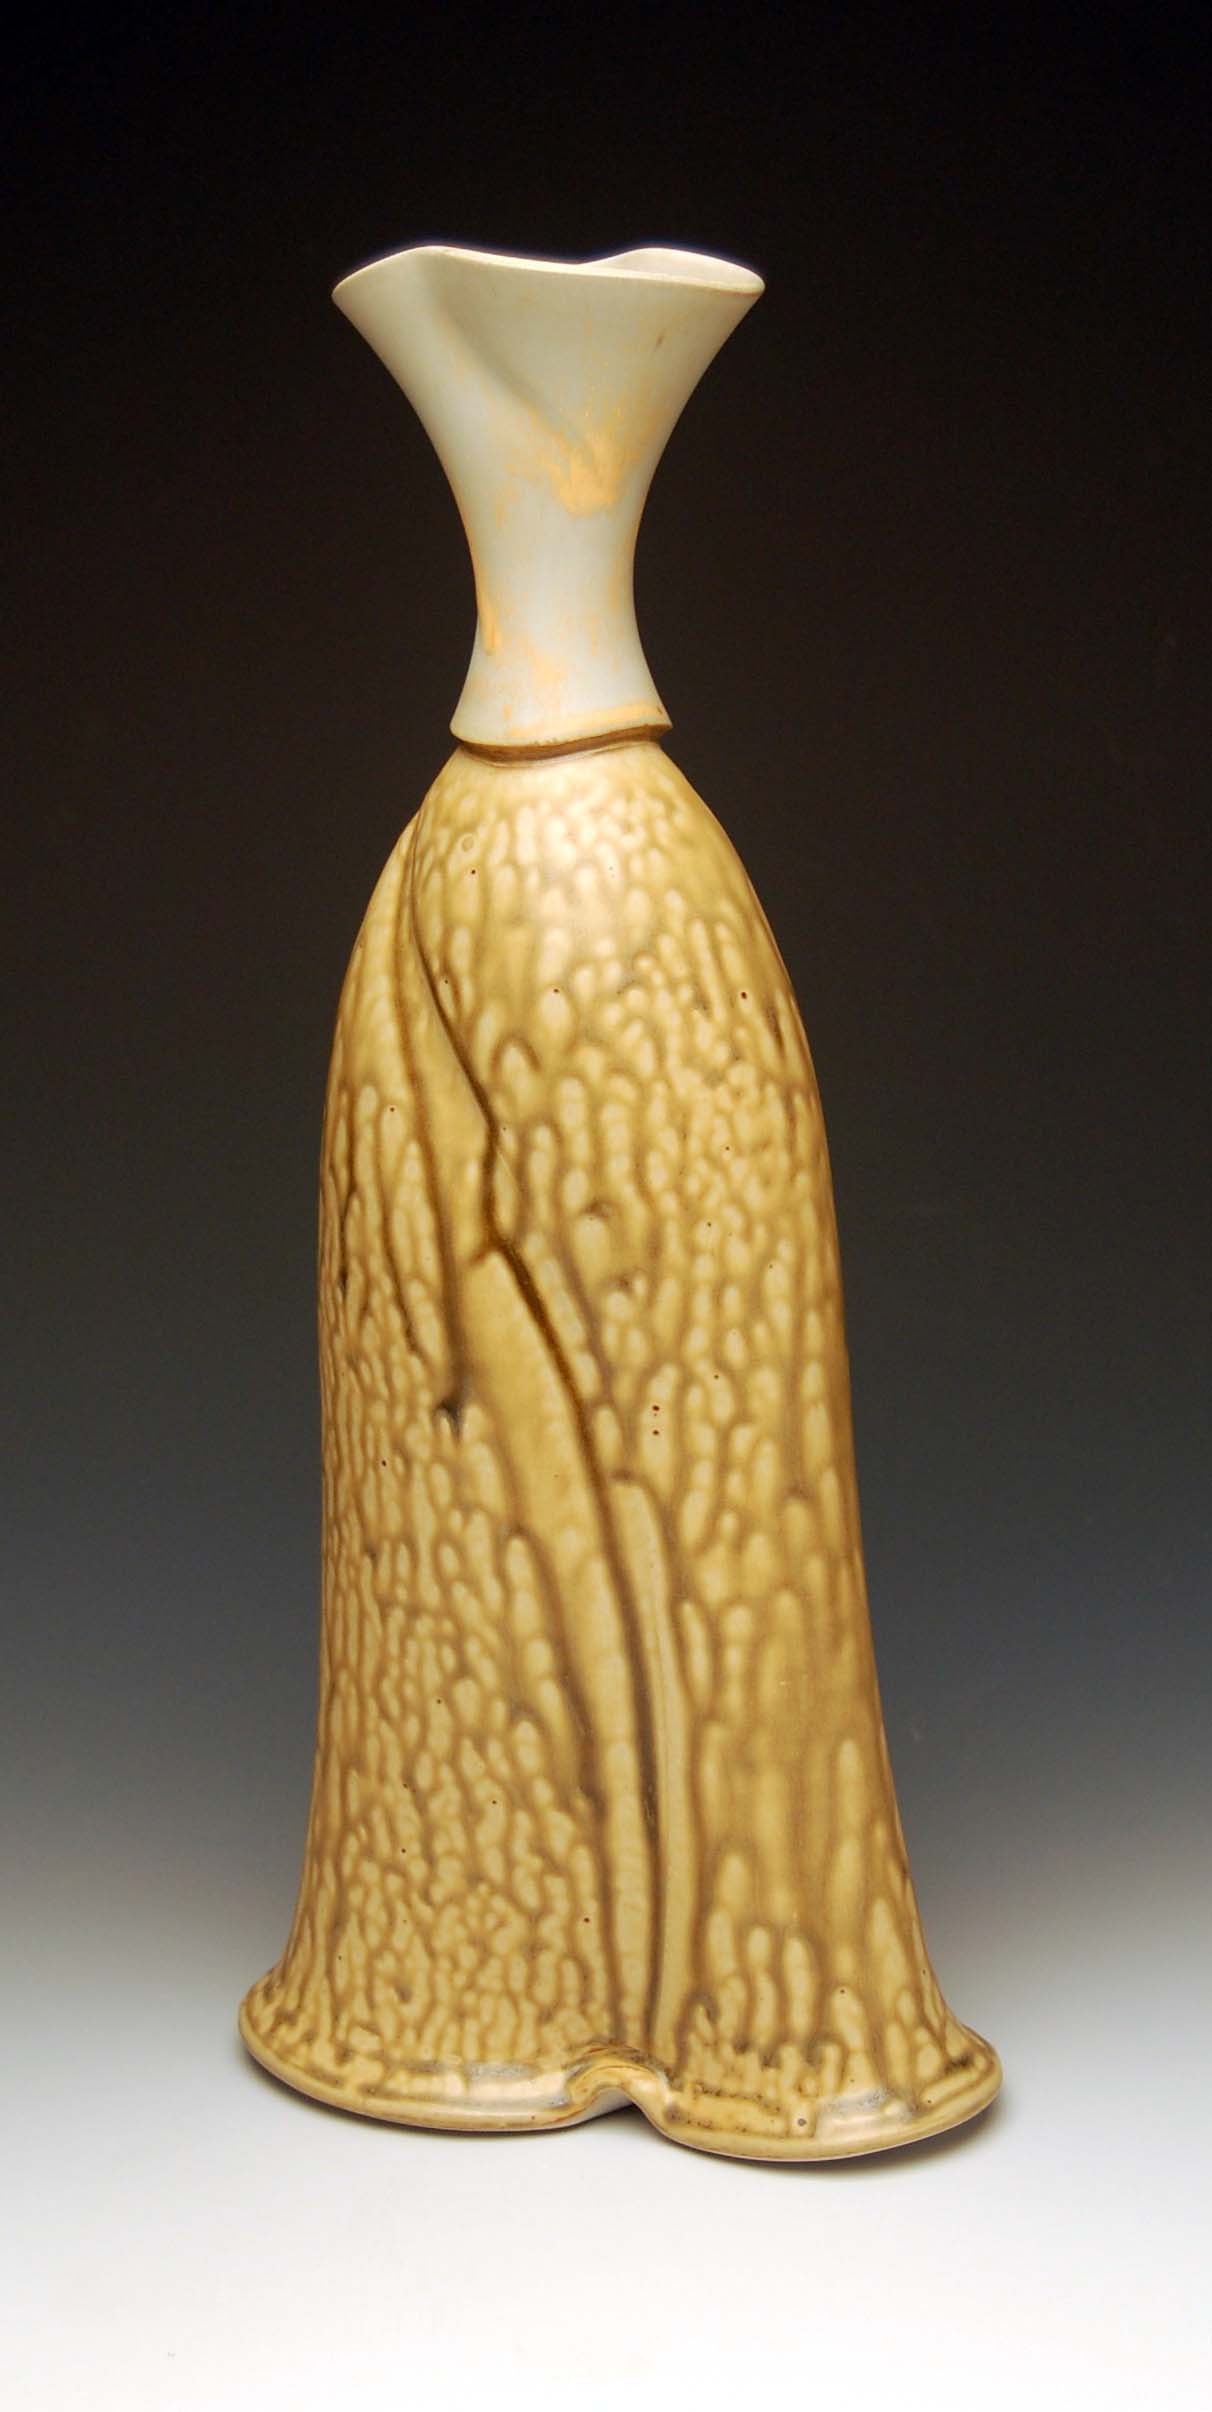 conner burns - vase at morlan gallery“ style=